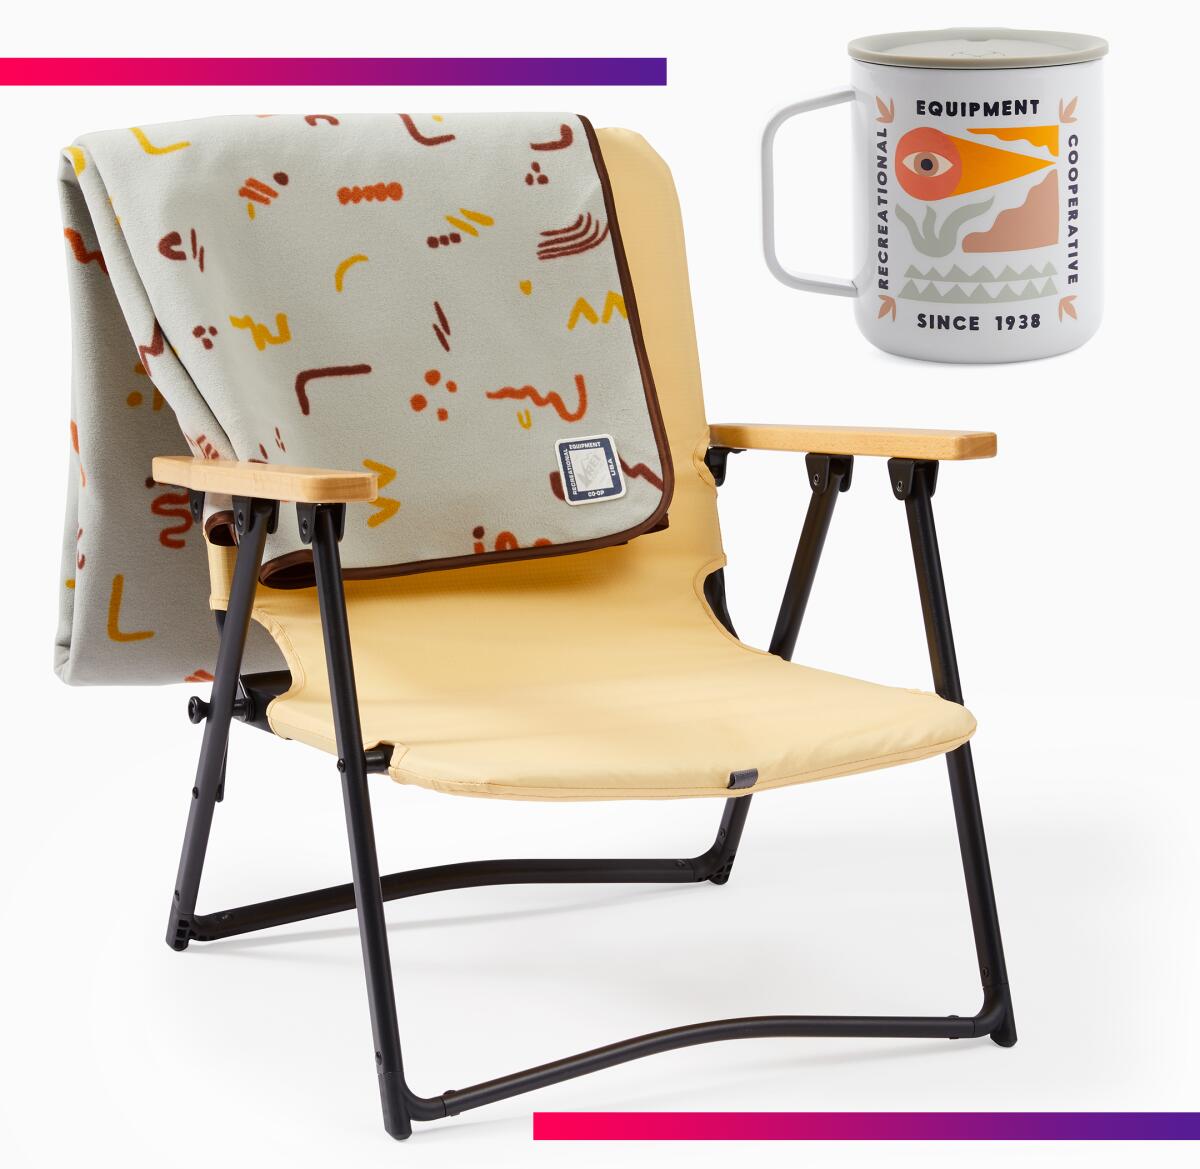 REI camping chair and mug